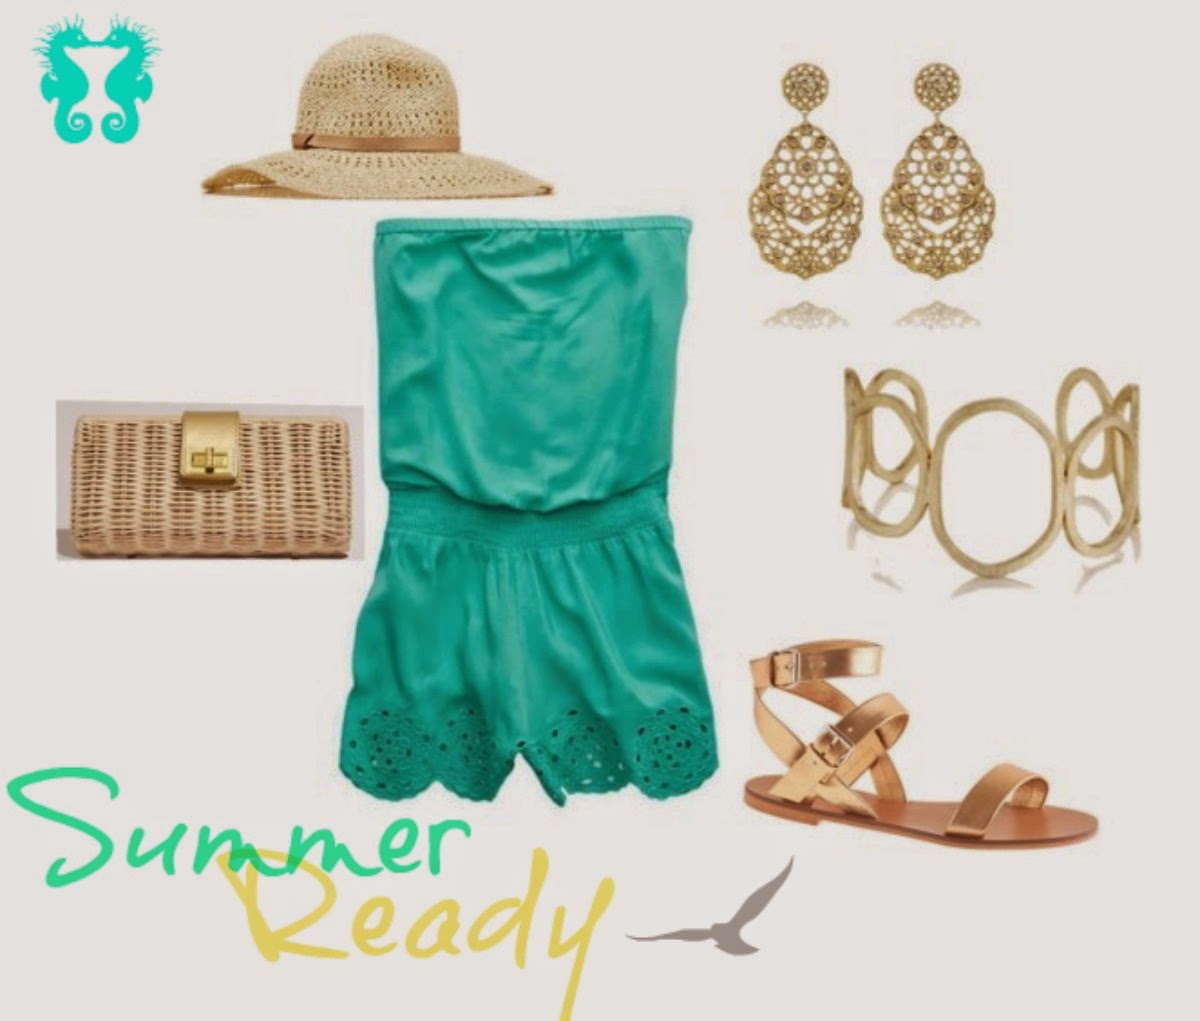 Summer Ready…